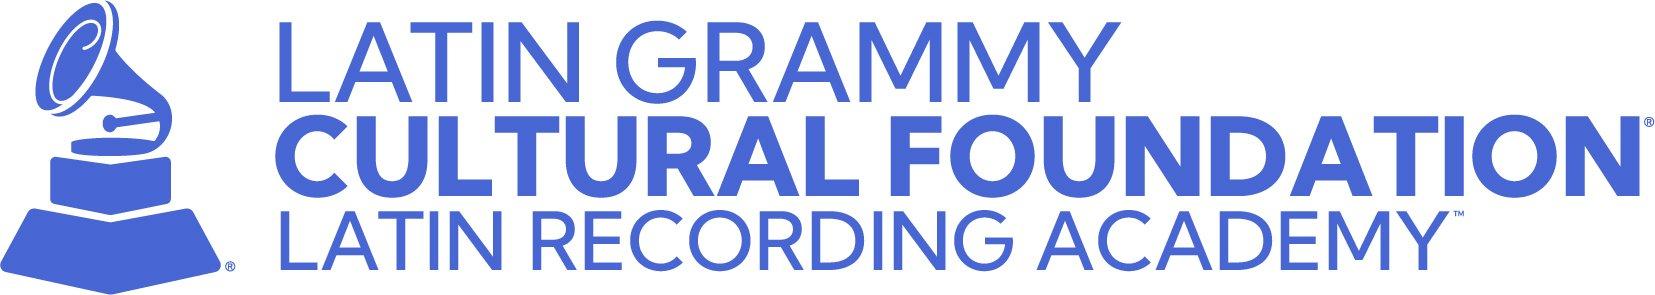 Latin Grammys Cultural Foundation